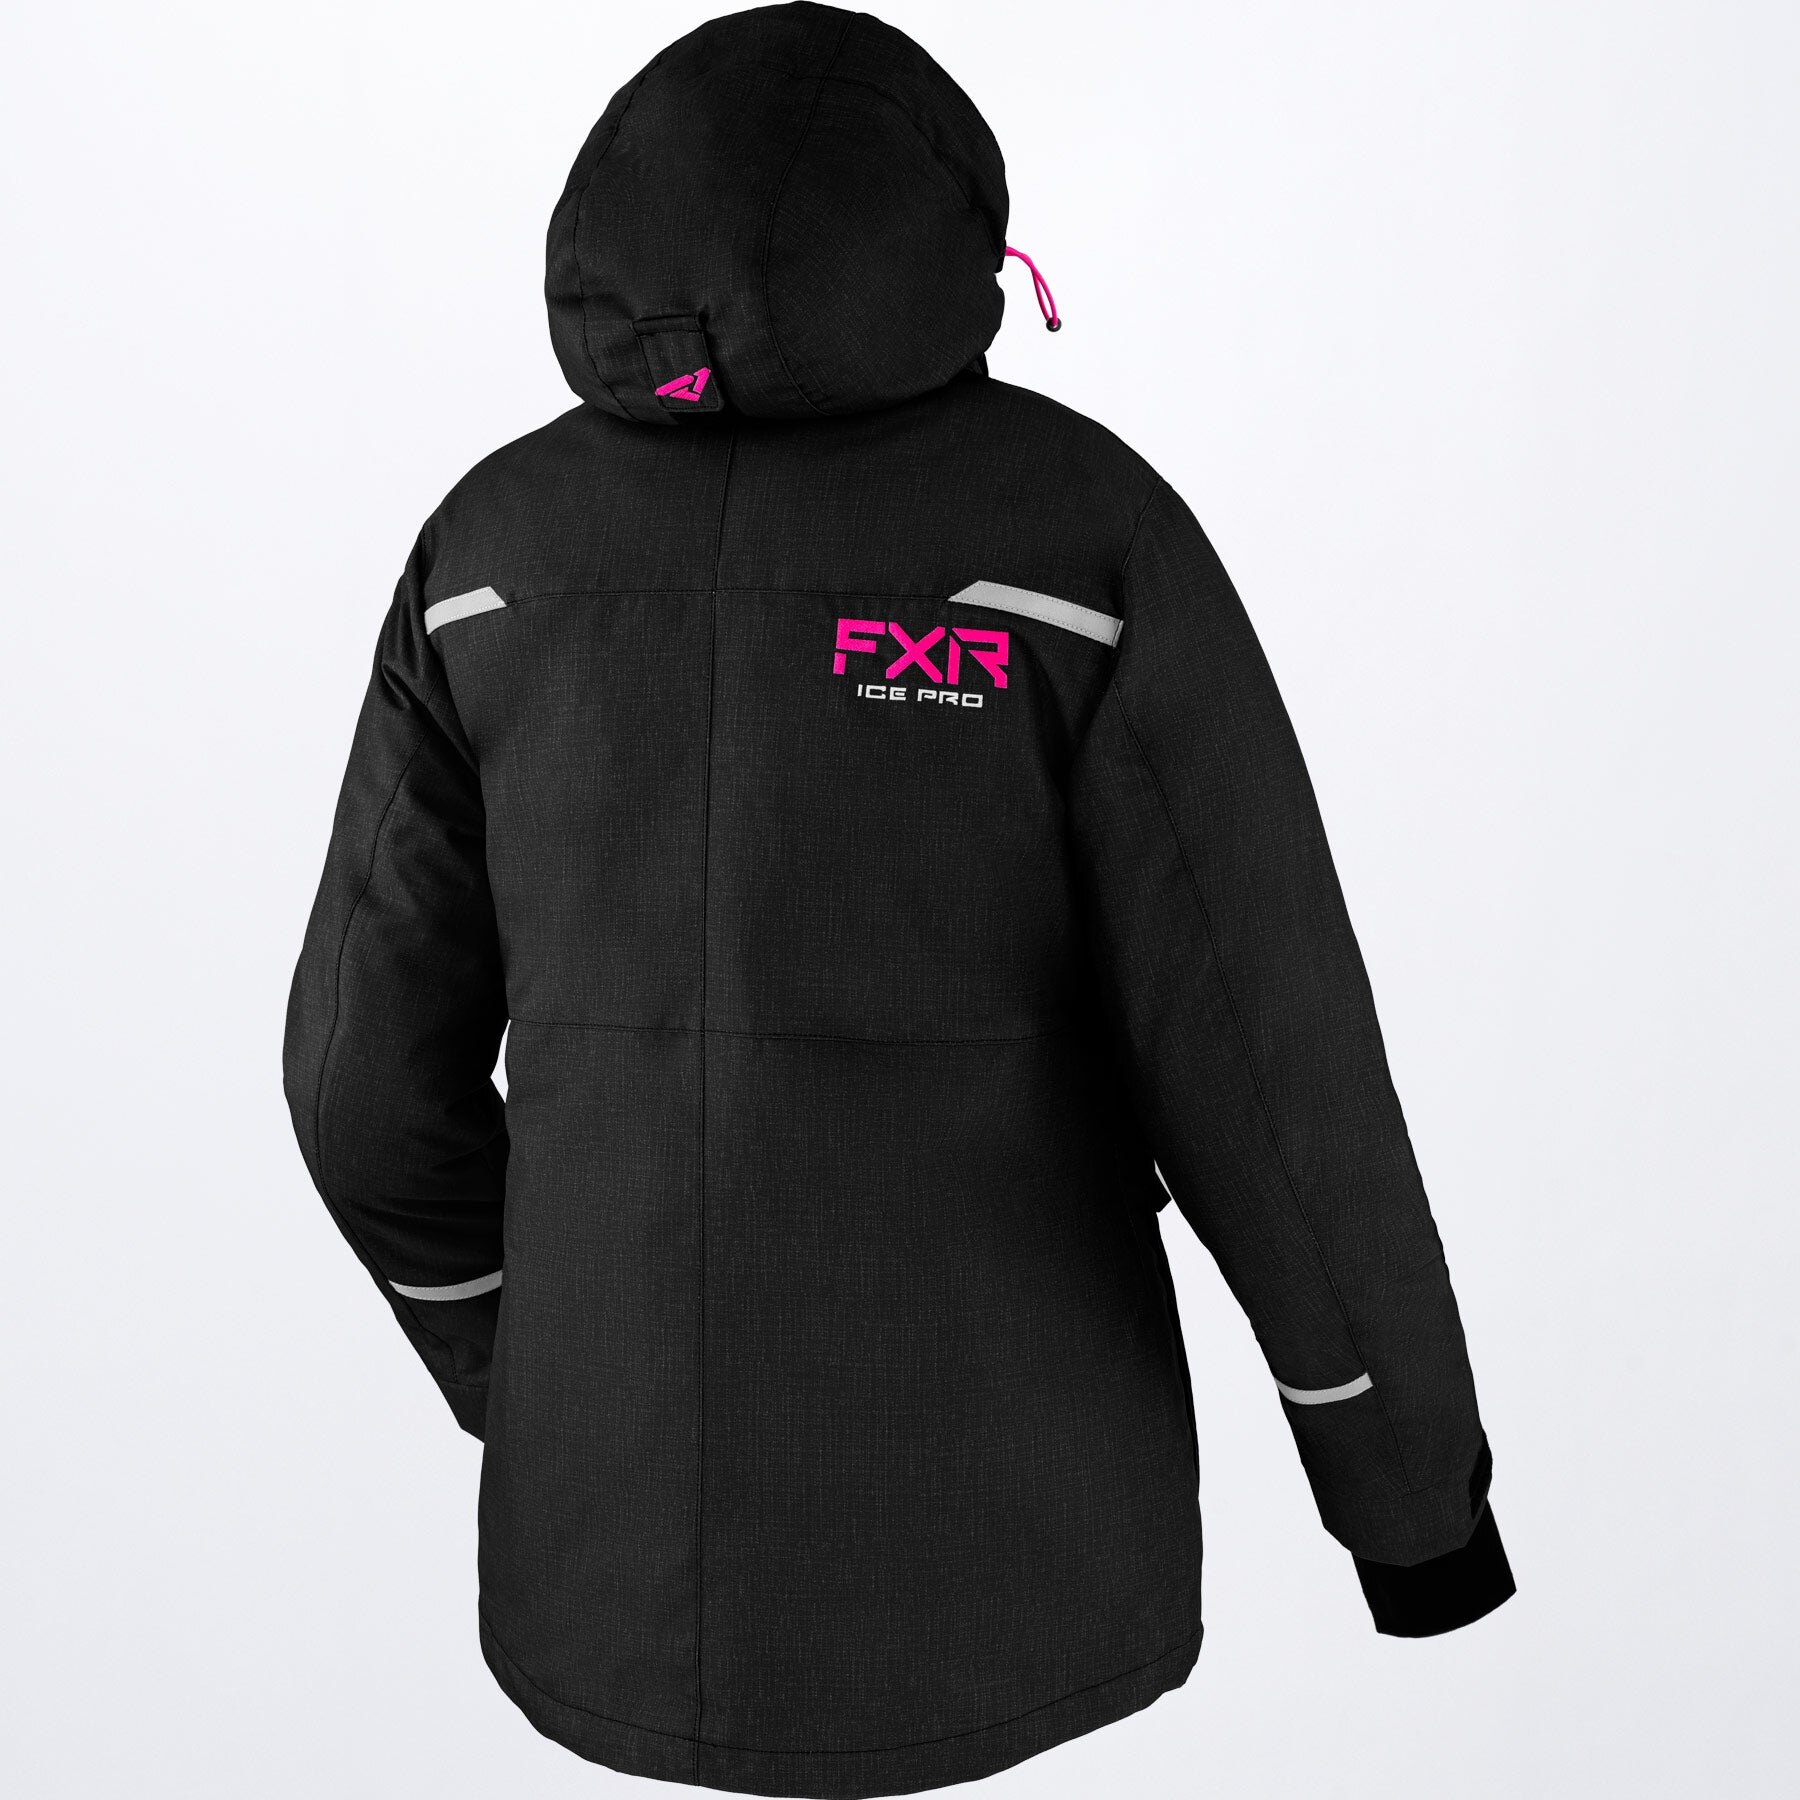 Women's Excursion Ice Pro Jacket 04 Black Linen/Elec Pink